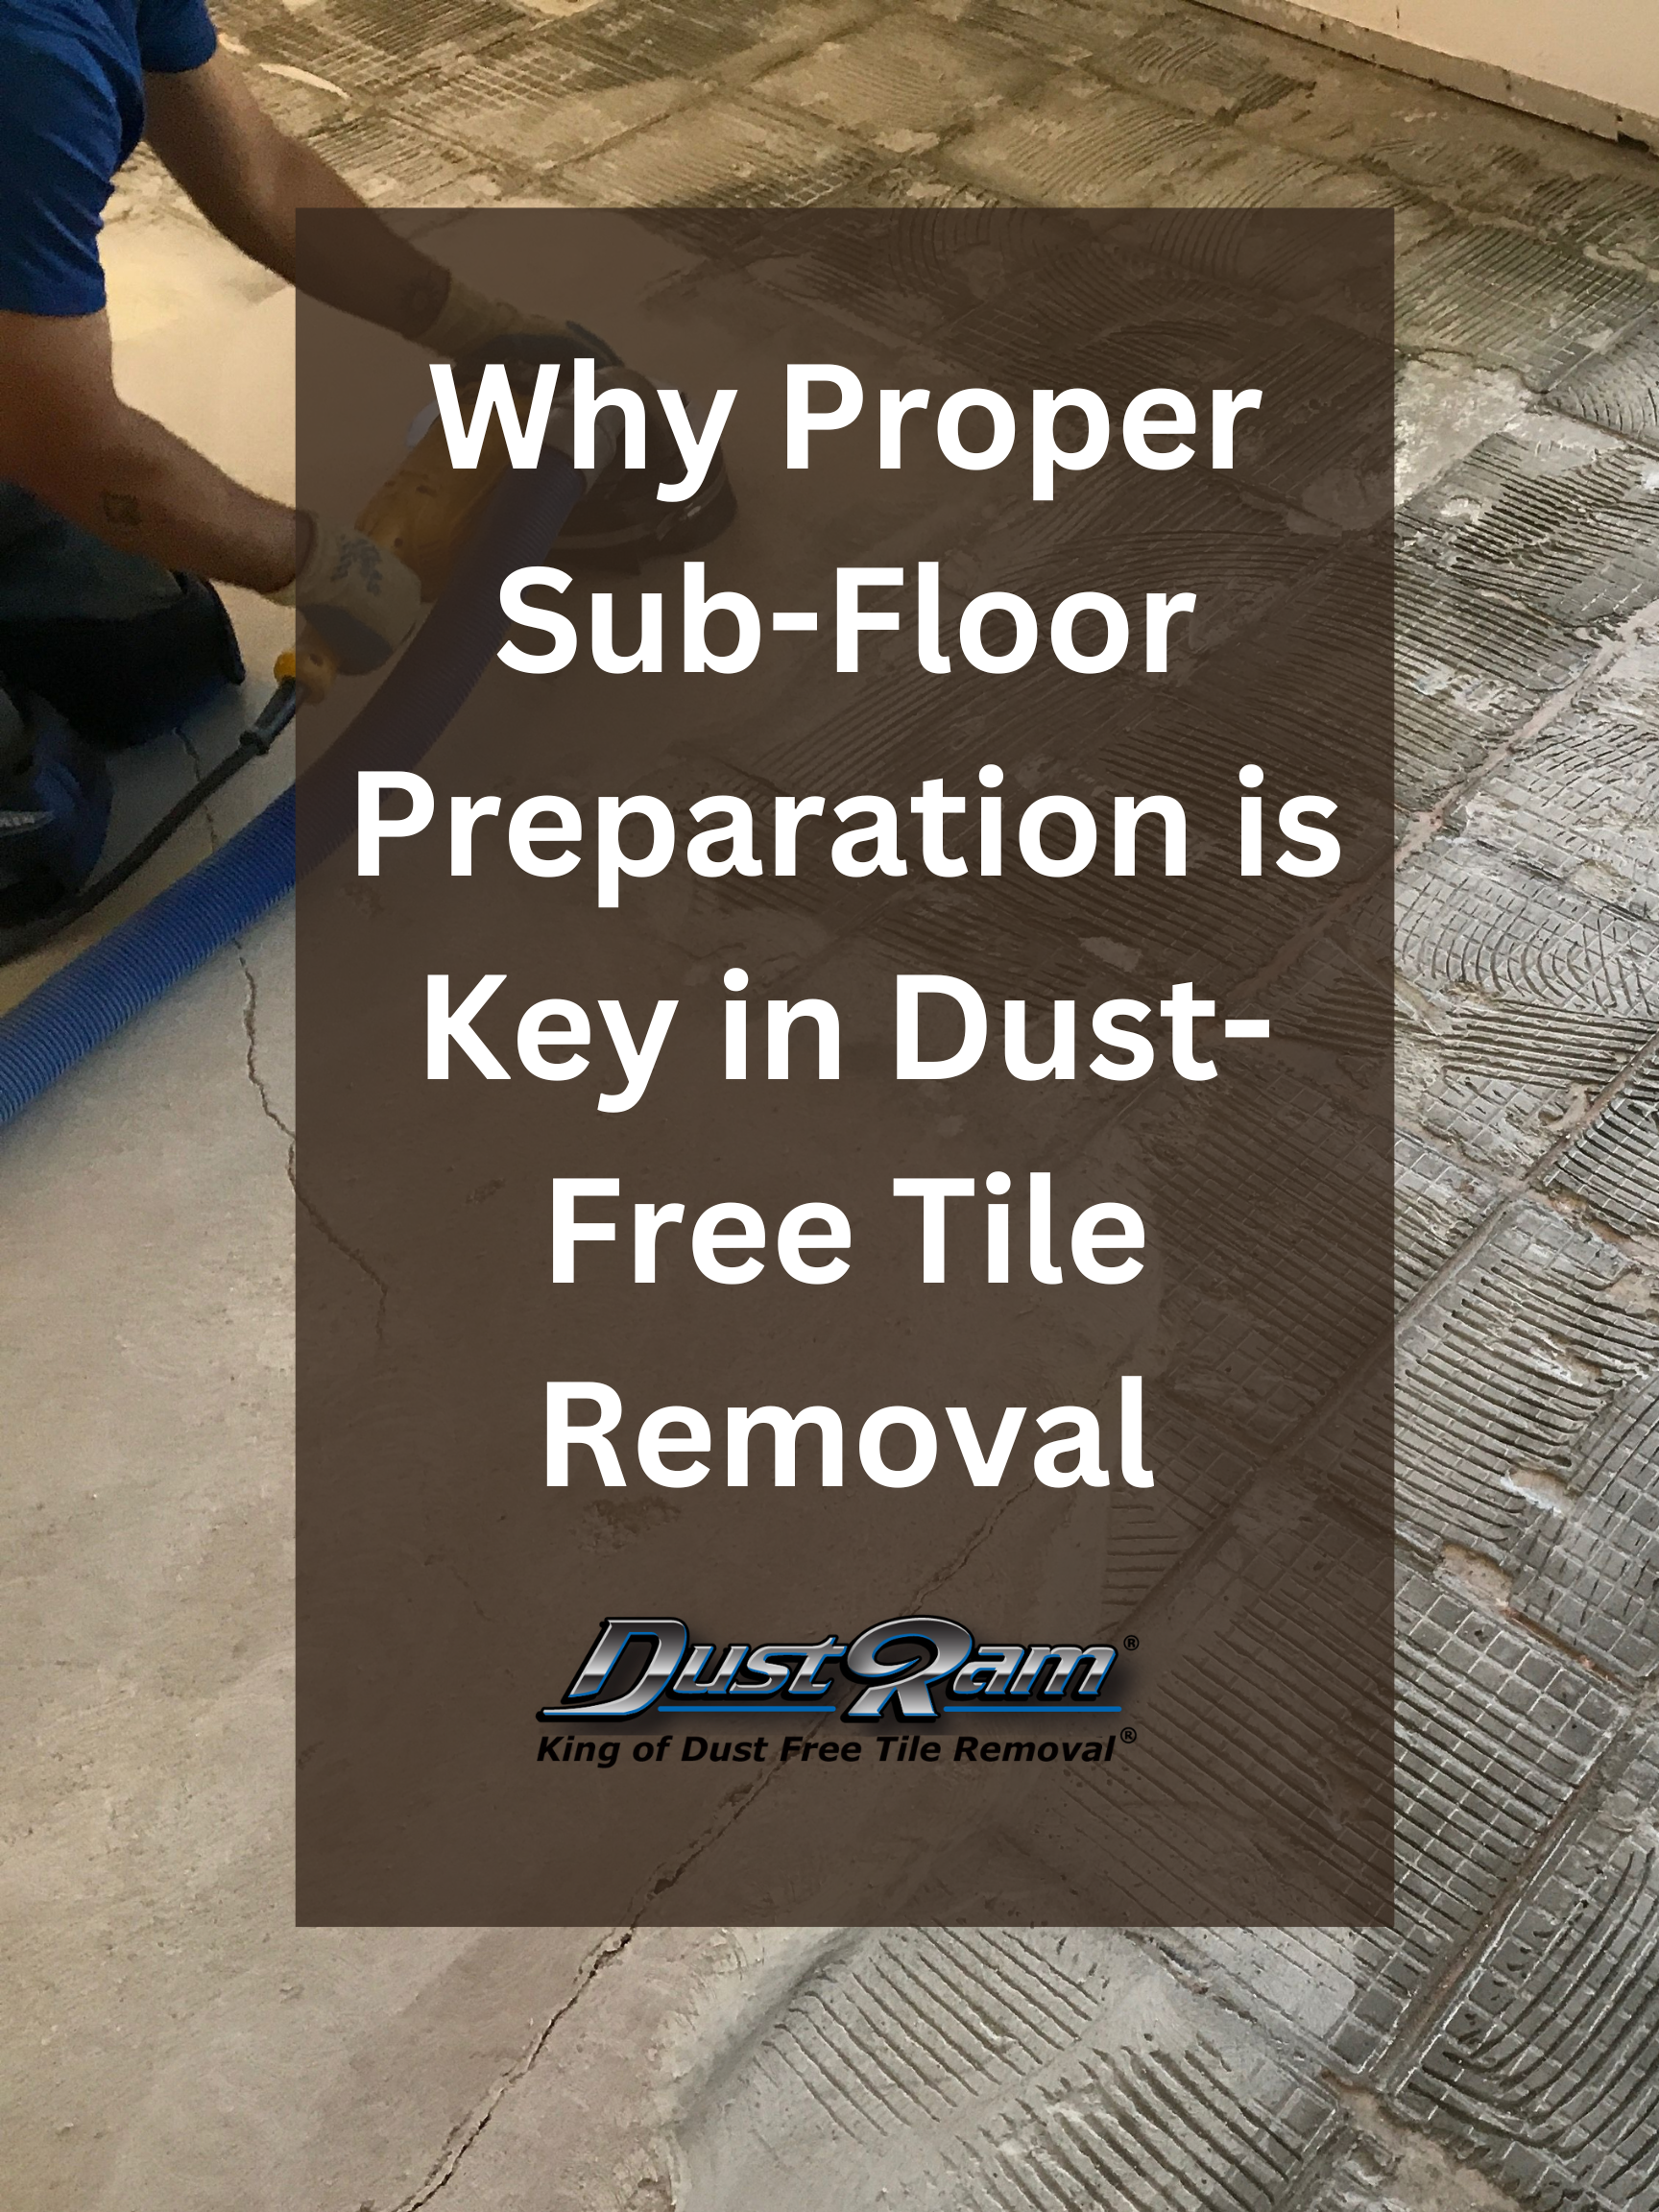 subfloor preparation in dust free tile removal